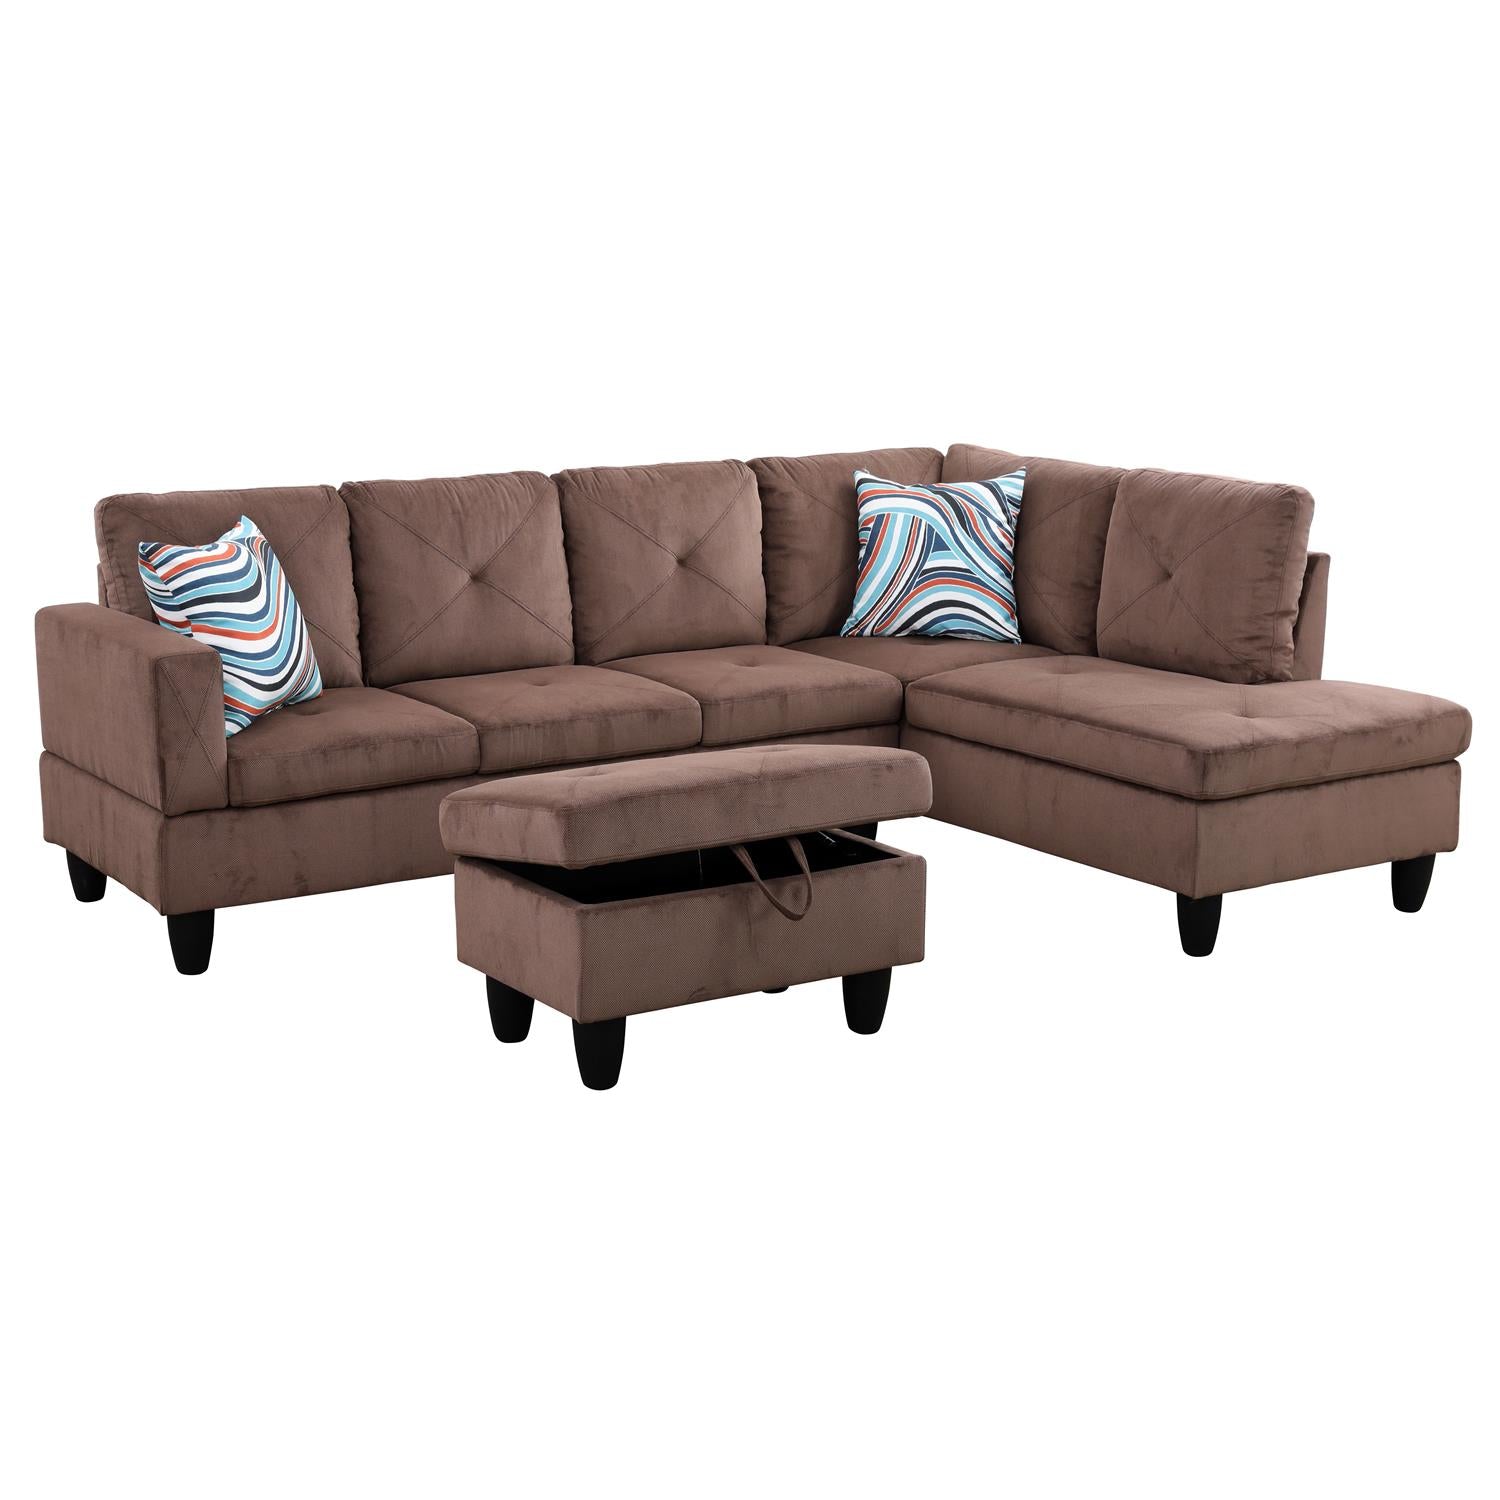 Ainehome Brown L-Shaped Corduroy Sofa Set